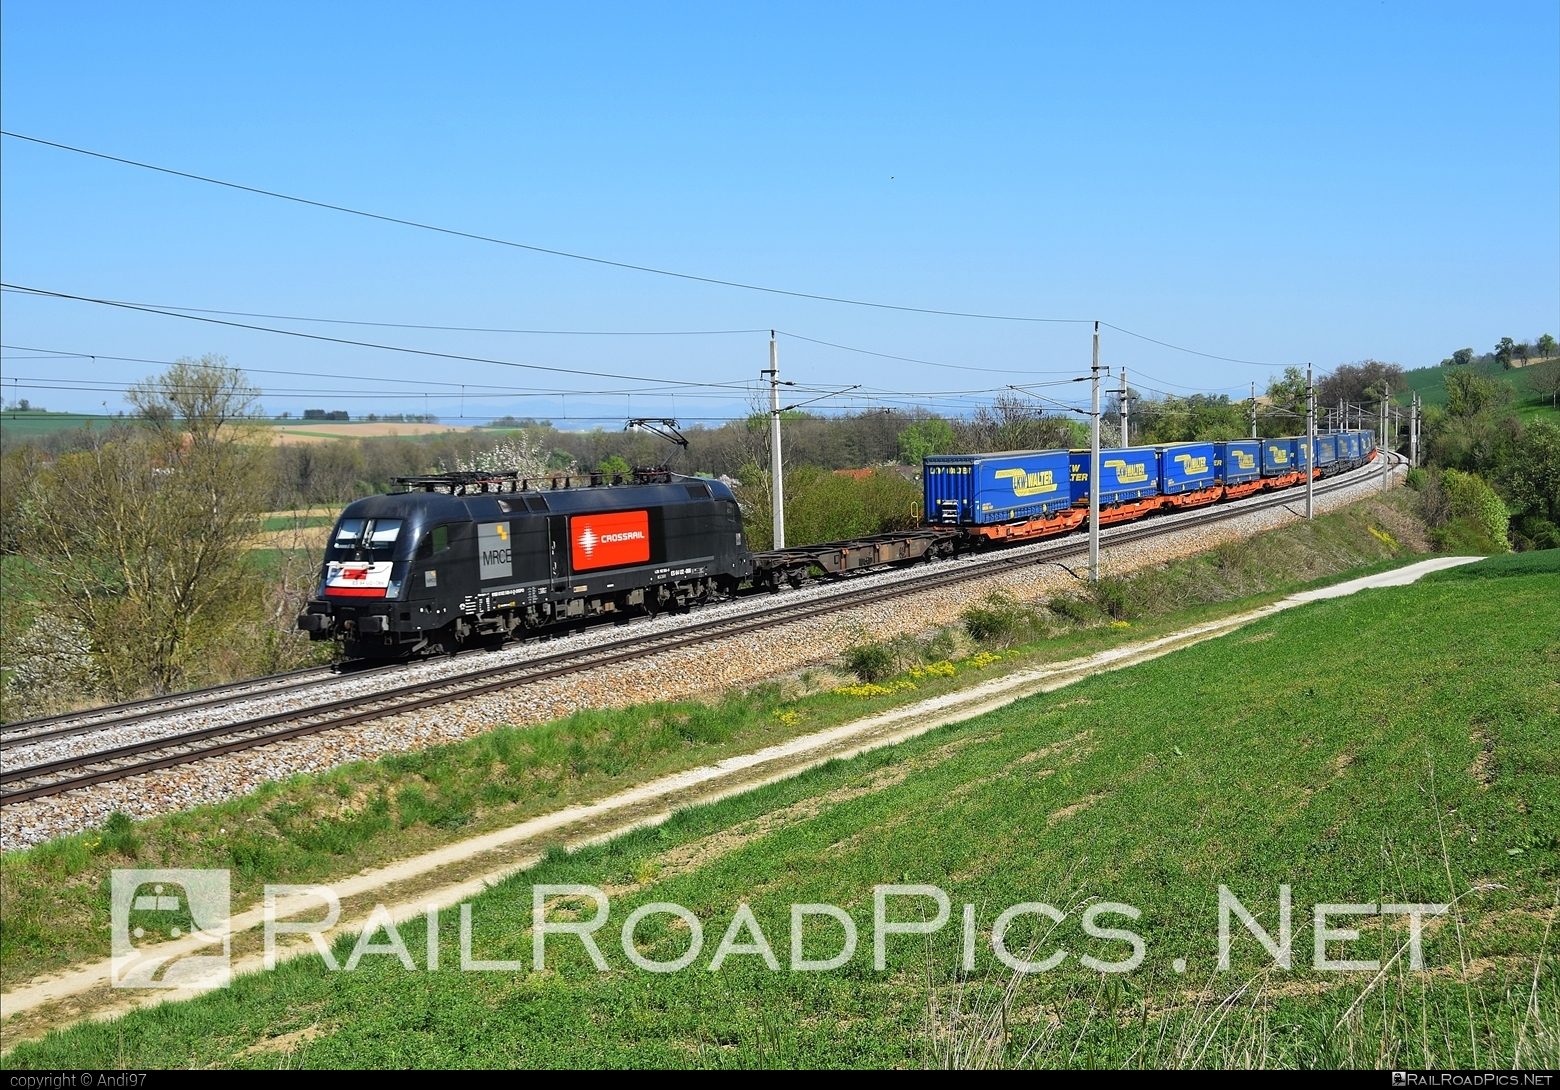 Siemens ES 64 U2 - 182 566 operated by Crossrail AG #crossrail #crossrailAg #dispolok #es64 #es64u2 #eurosprinter #flatwagon #lkwwalter #mitsuirailcapitaleurope #mitsuirailcapitaleuropegmbh #mrce #semitrailer #siemens #siemensEs64 #siemensEs64u2 #siemenstaurus #taurus #tauruslocomotive